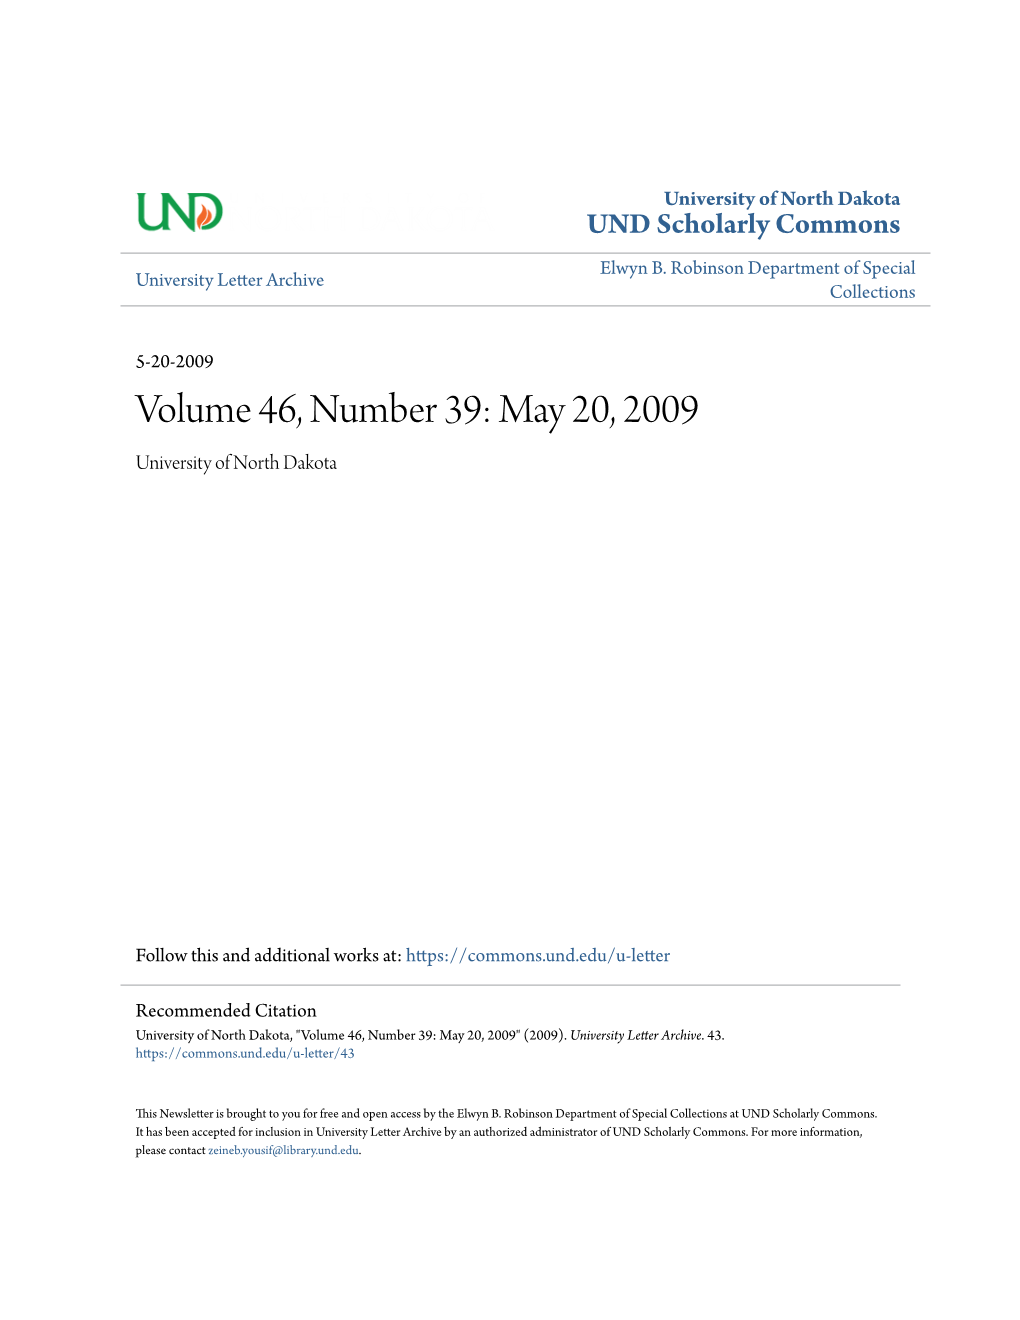 Volume 46, Number 39: May 20, 2009 University of North Dakota